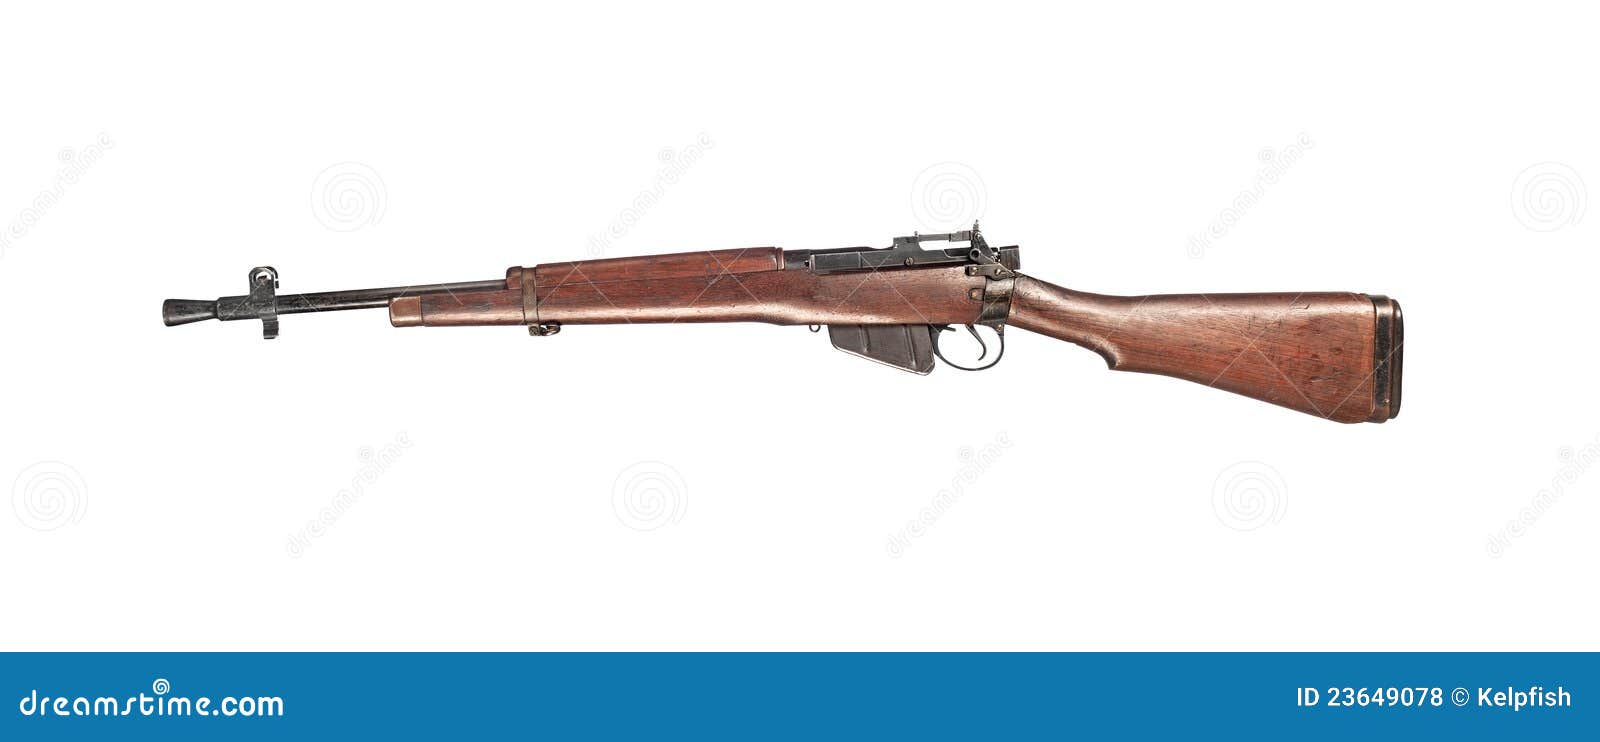 British Enfield Rifle stock photo. Image of military - 23649078